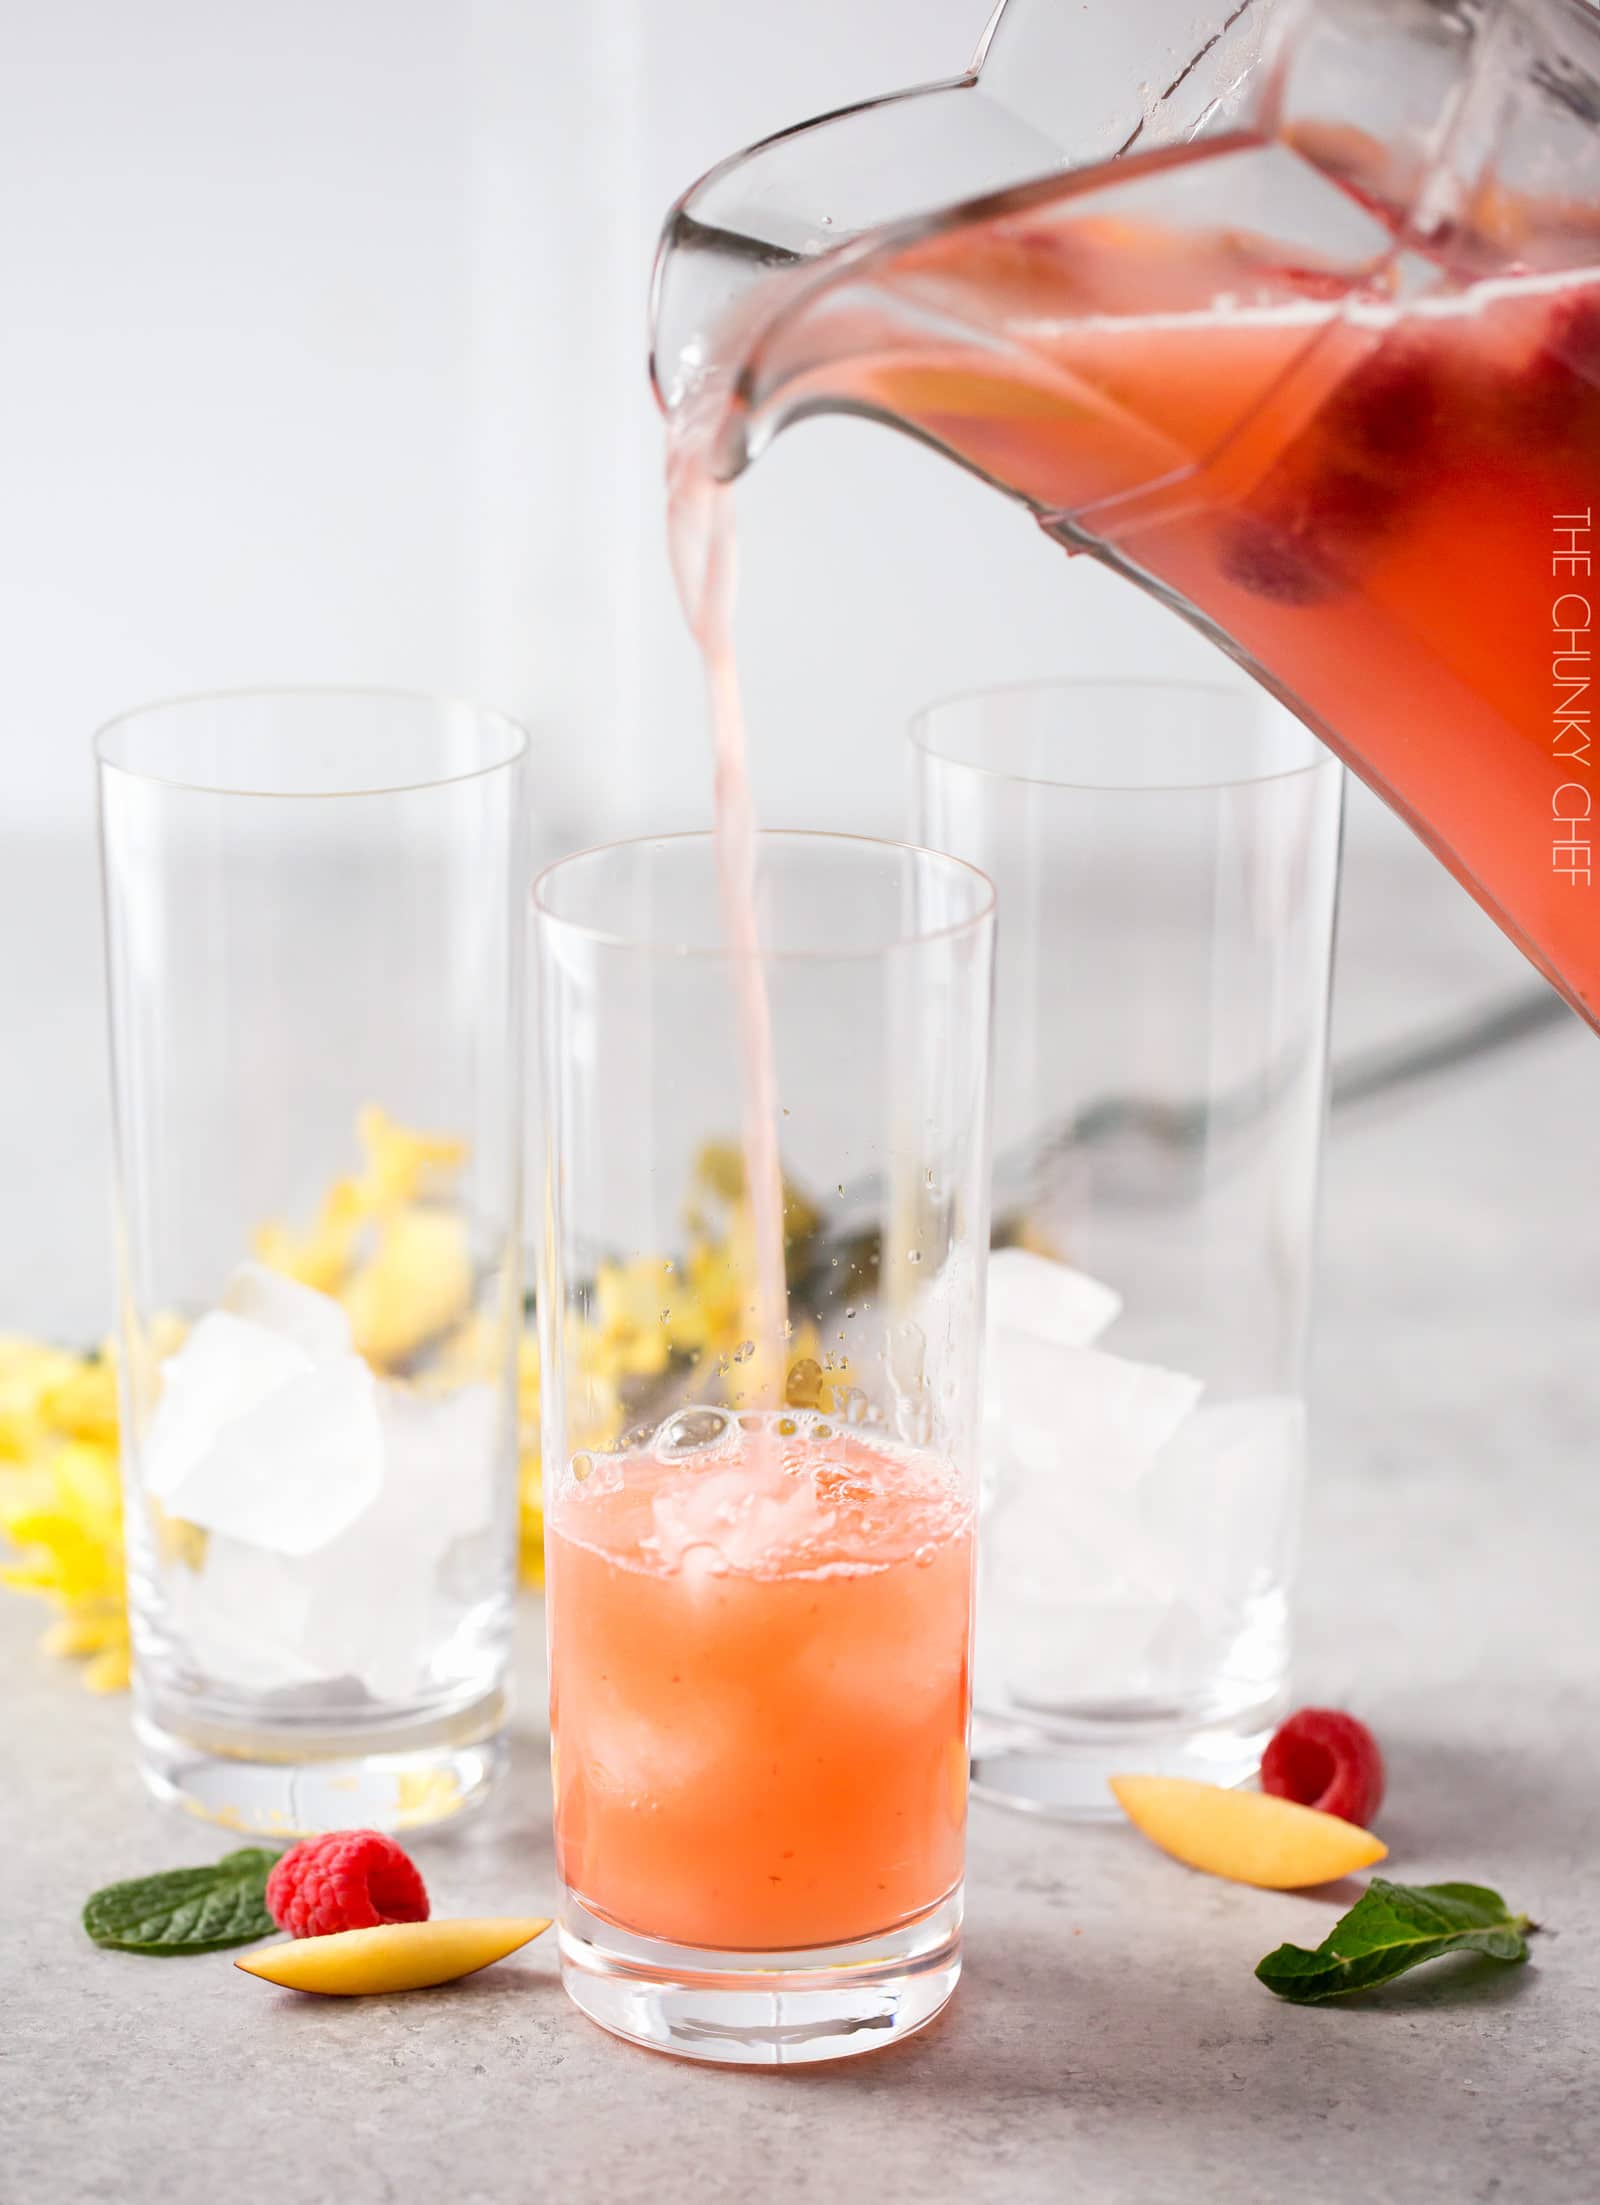 Homemade Raspberry Peach Lemonade | The perfect refreshing summer drink is here! Full of raspberry and peach flavors, this homemade lemonade is like drinking sunshine! | http://thechunkychef.com